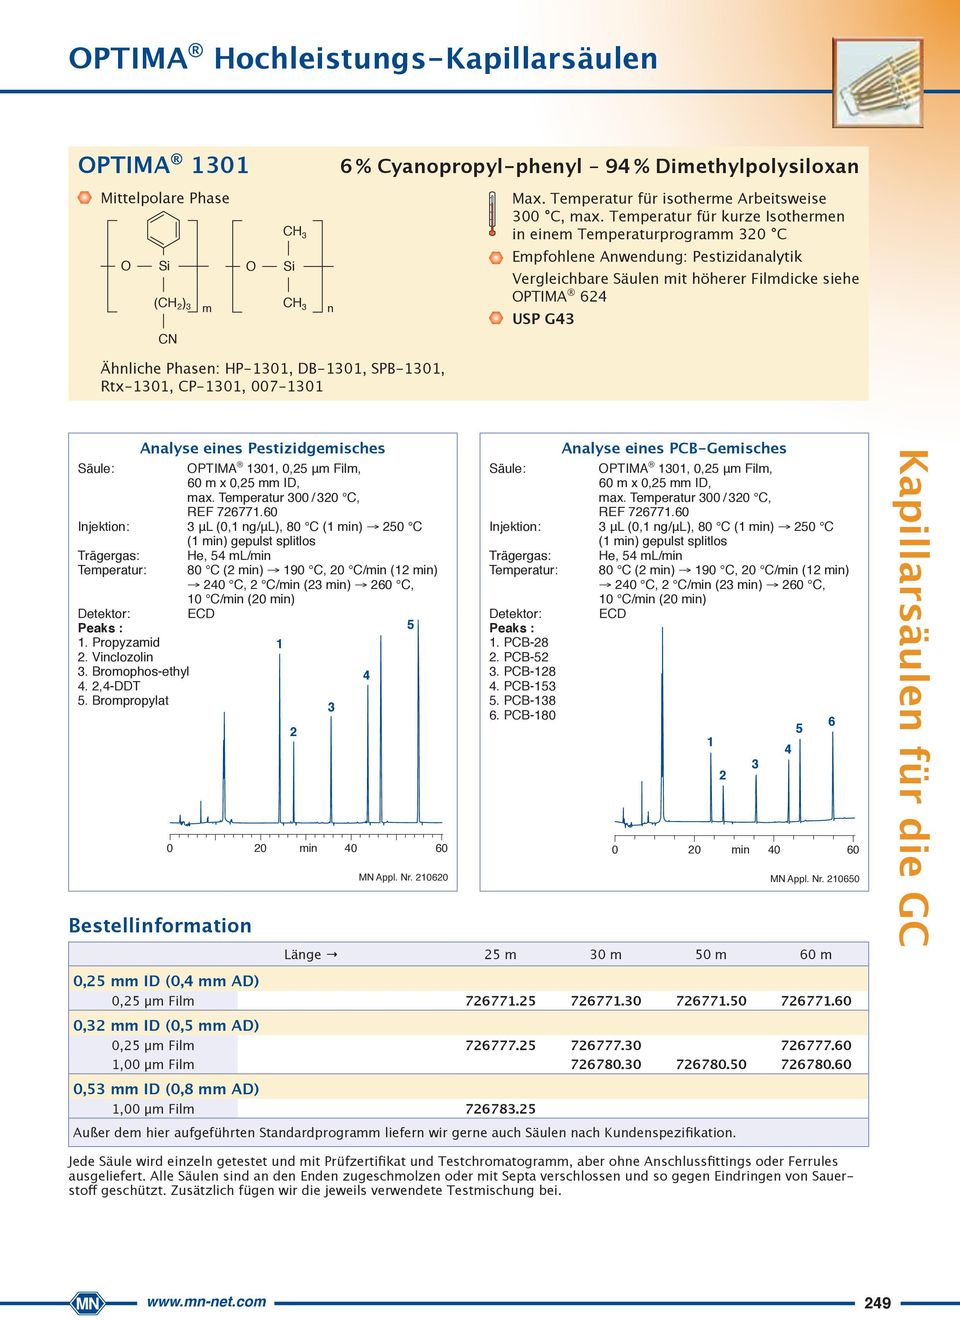 SPB 0, Rtx-0, CP-0, 007-0 Analyse eines Pestizidgemisches Säule: PTIMA 0, 0, μm Film, 60 m x 0, mm ID, max. Temperatur 00 / 0 C, REF 7677.